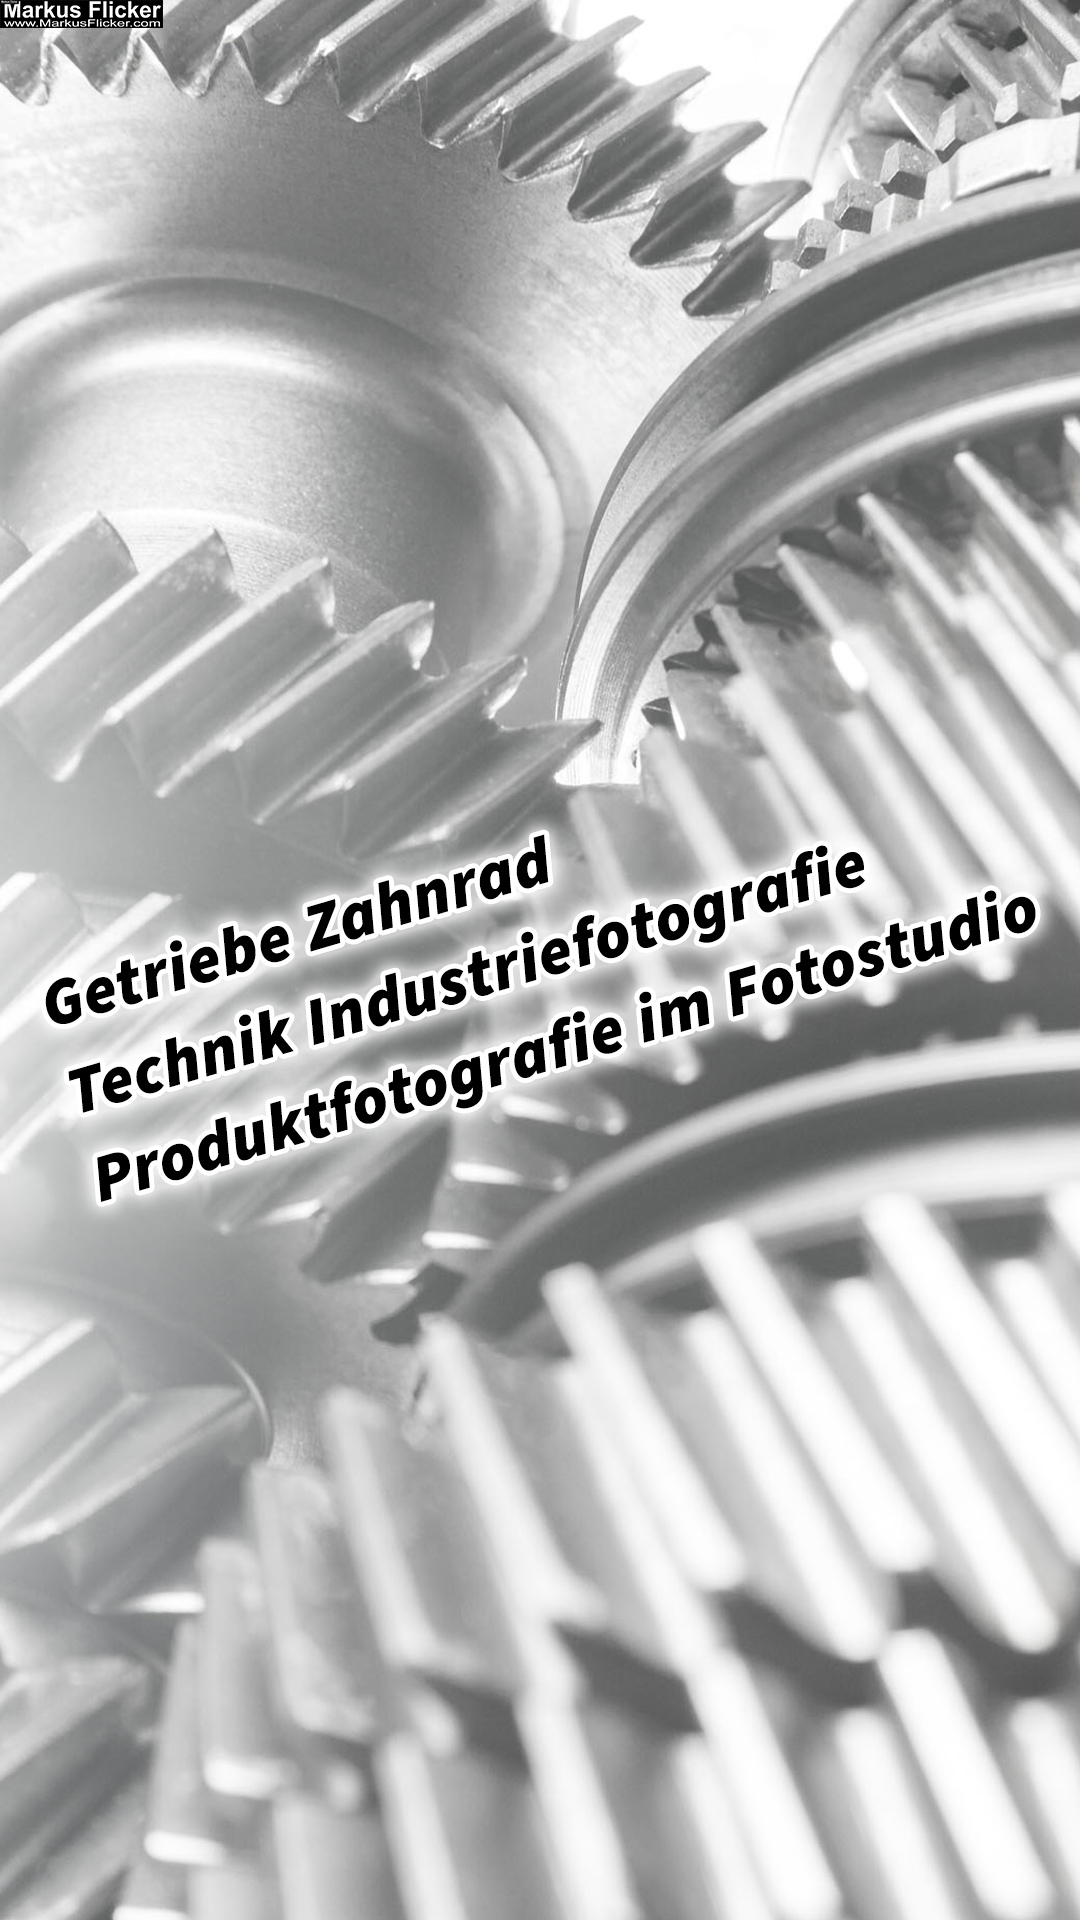 Getriebe Zahnrad Technik Industriefotografie Produktfotografie im Fotostudio